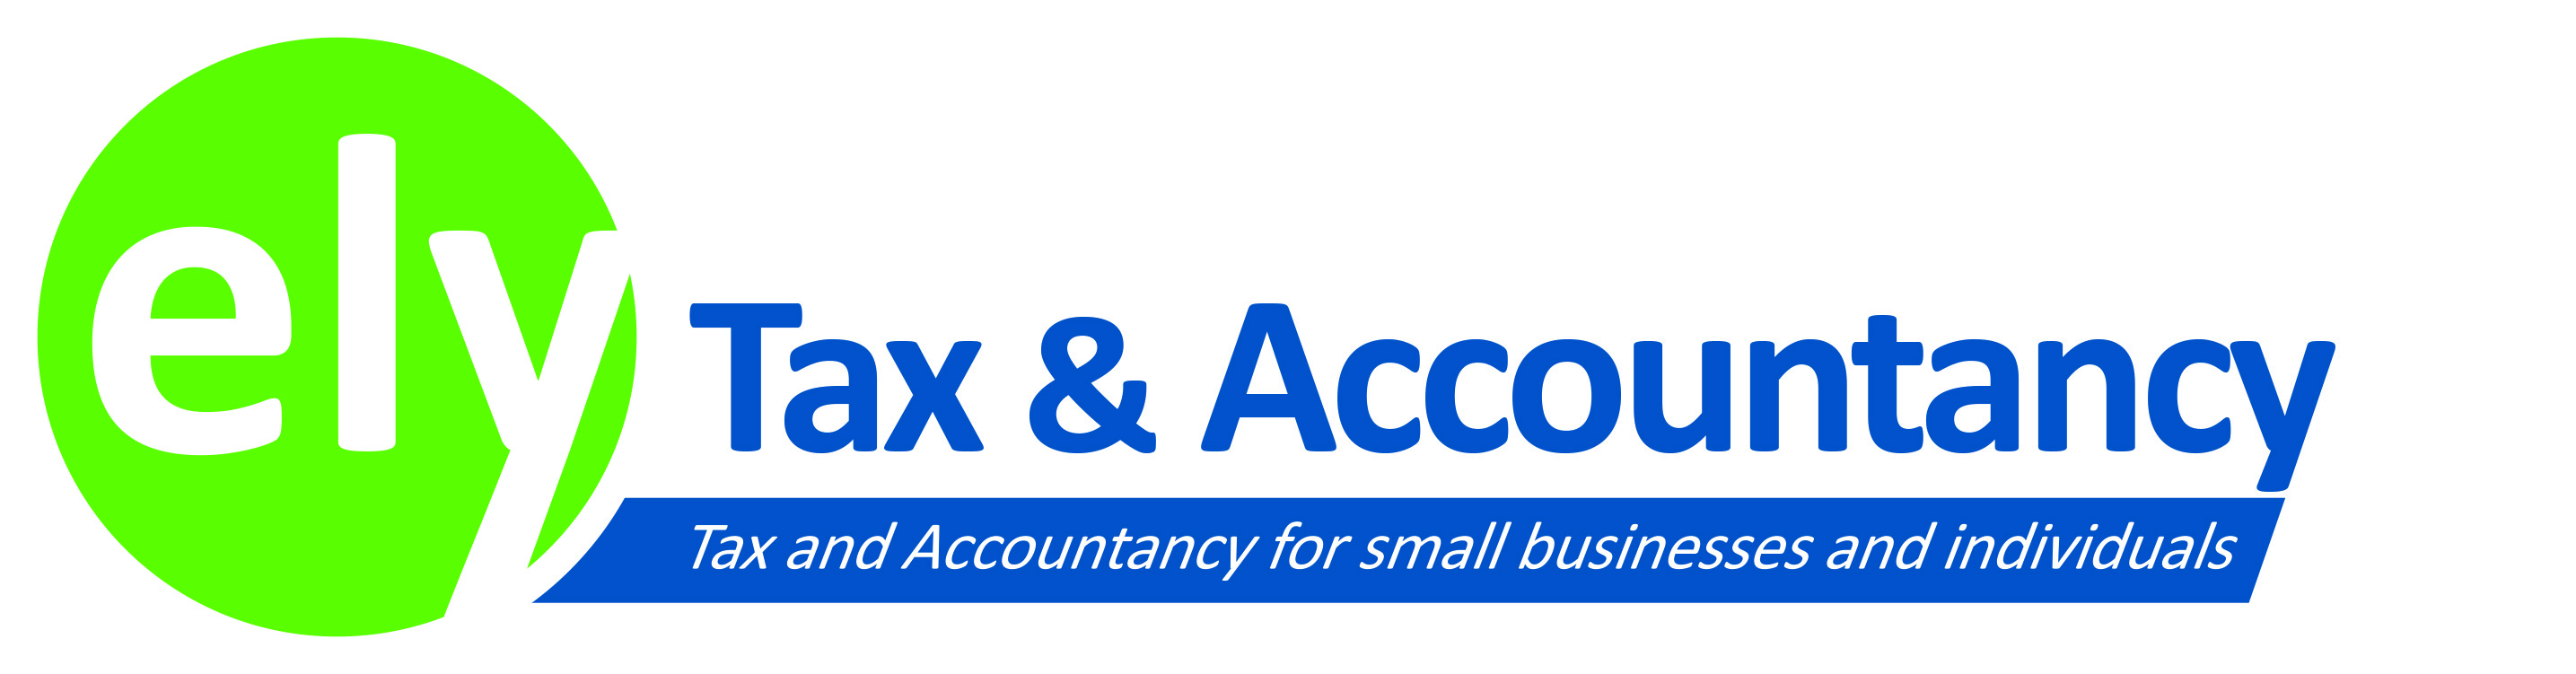 Ely Tax & Accountancy